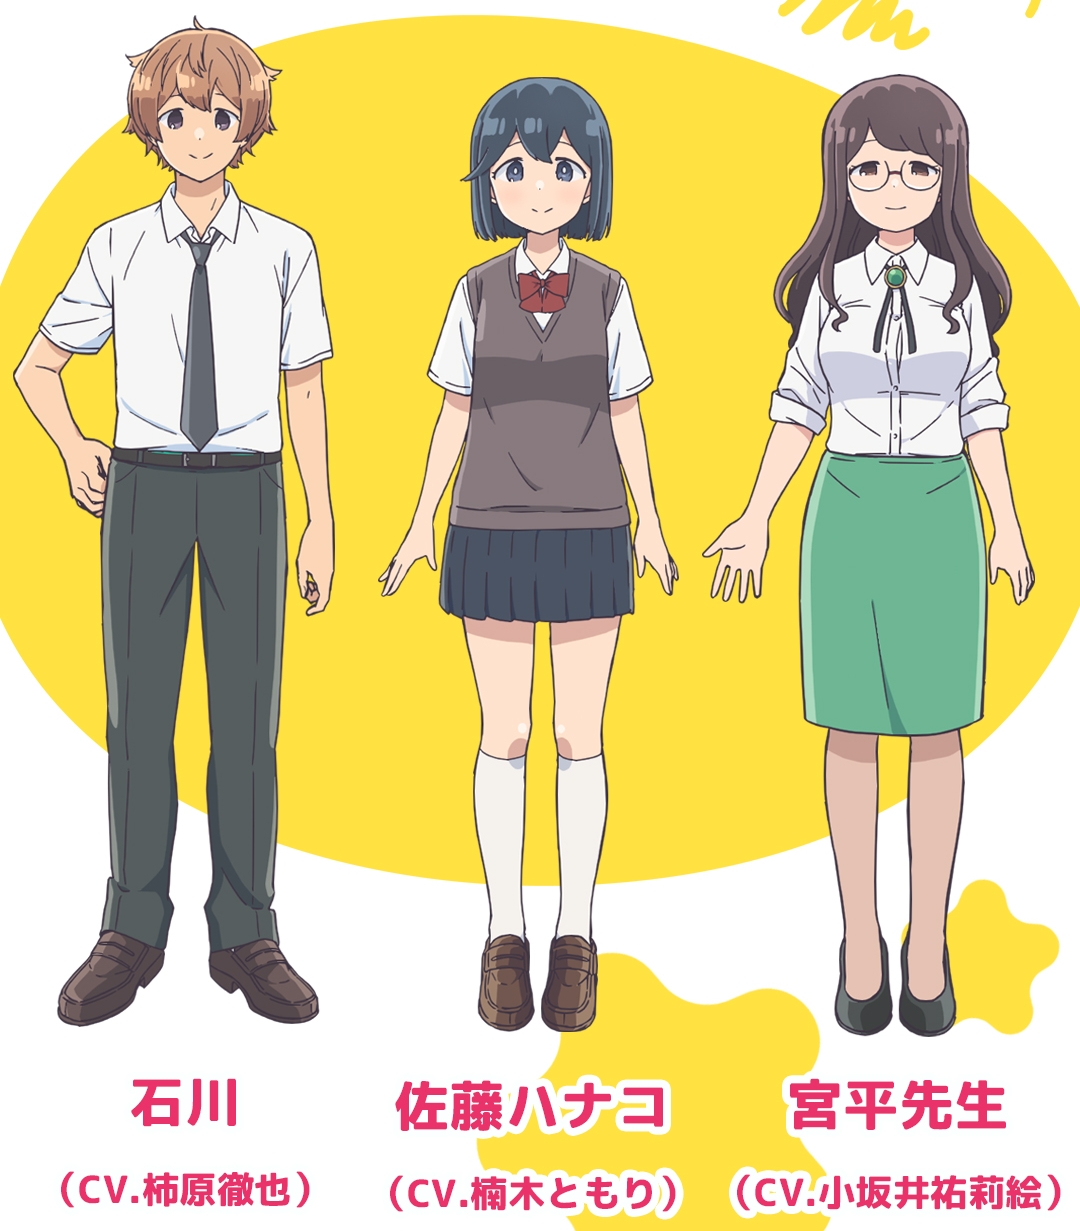 Additional cast of Aharen-san anime